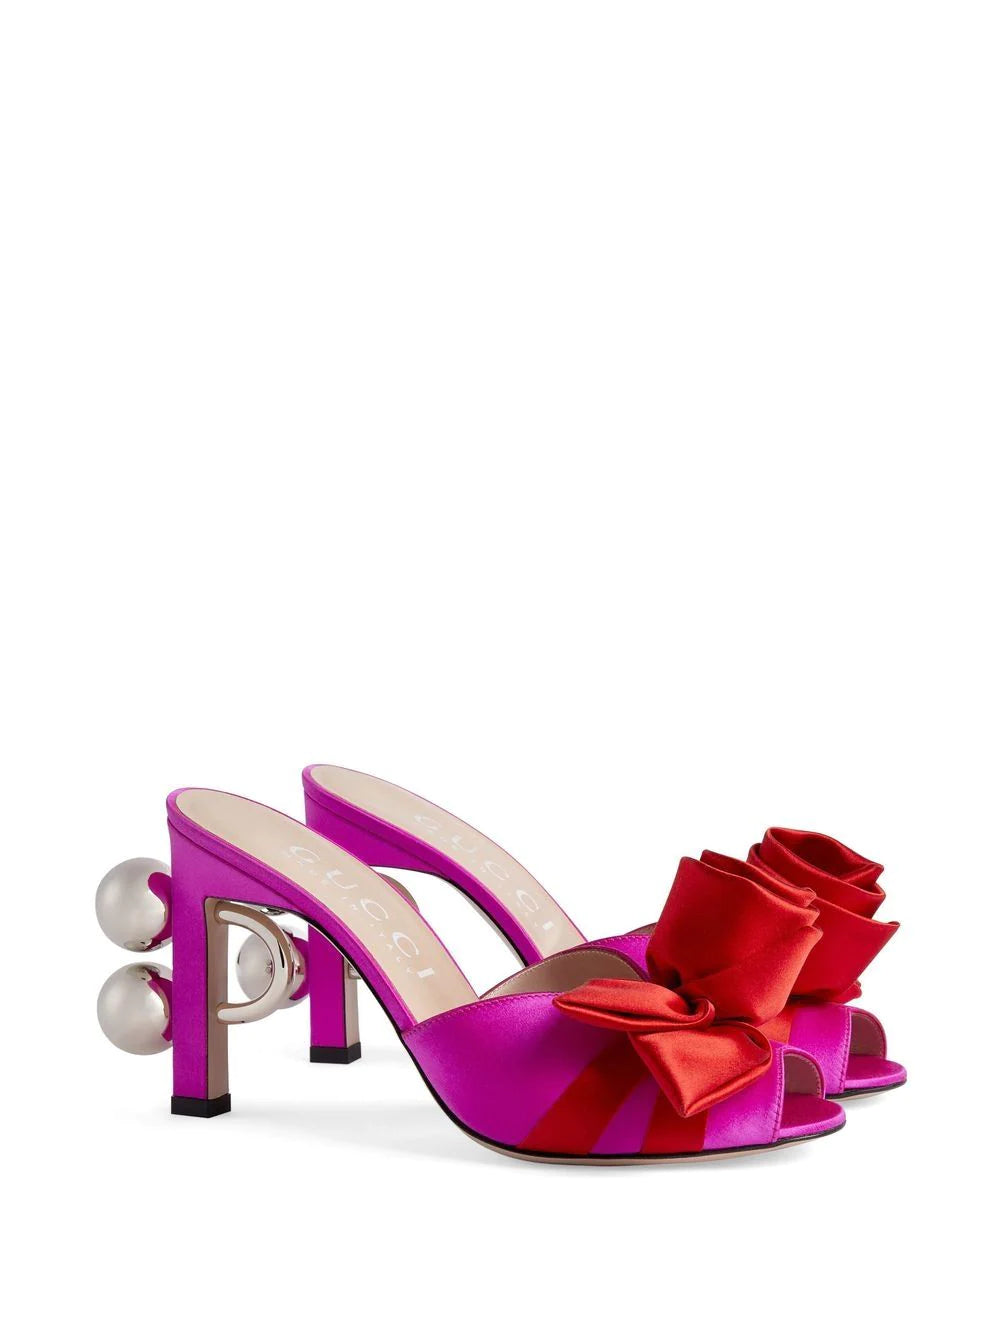 Gucci rose-appliqué satin sandals